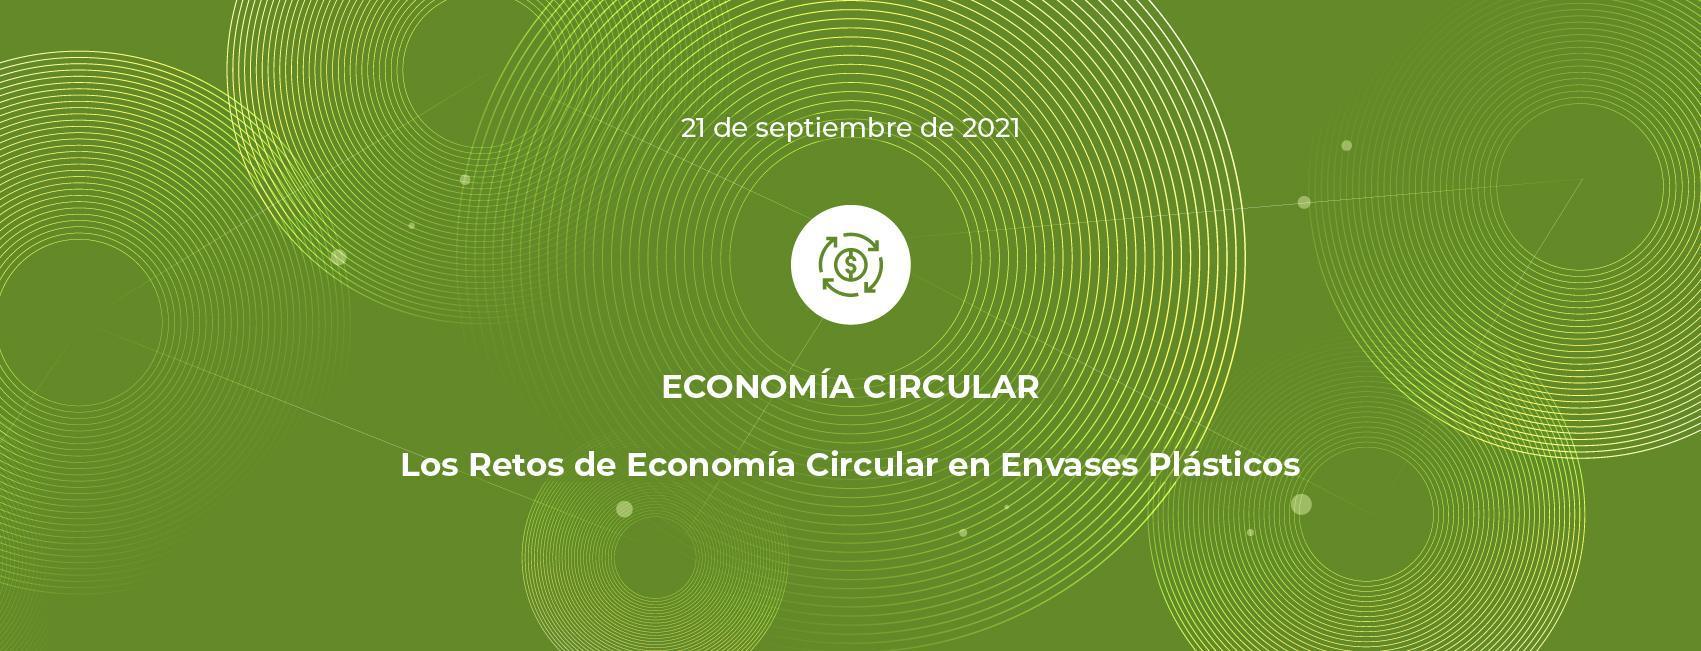 economia circular plasticos